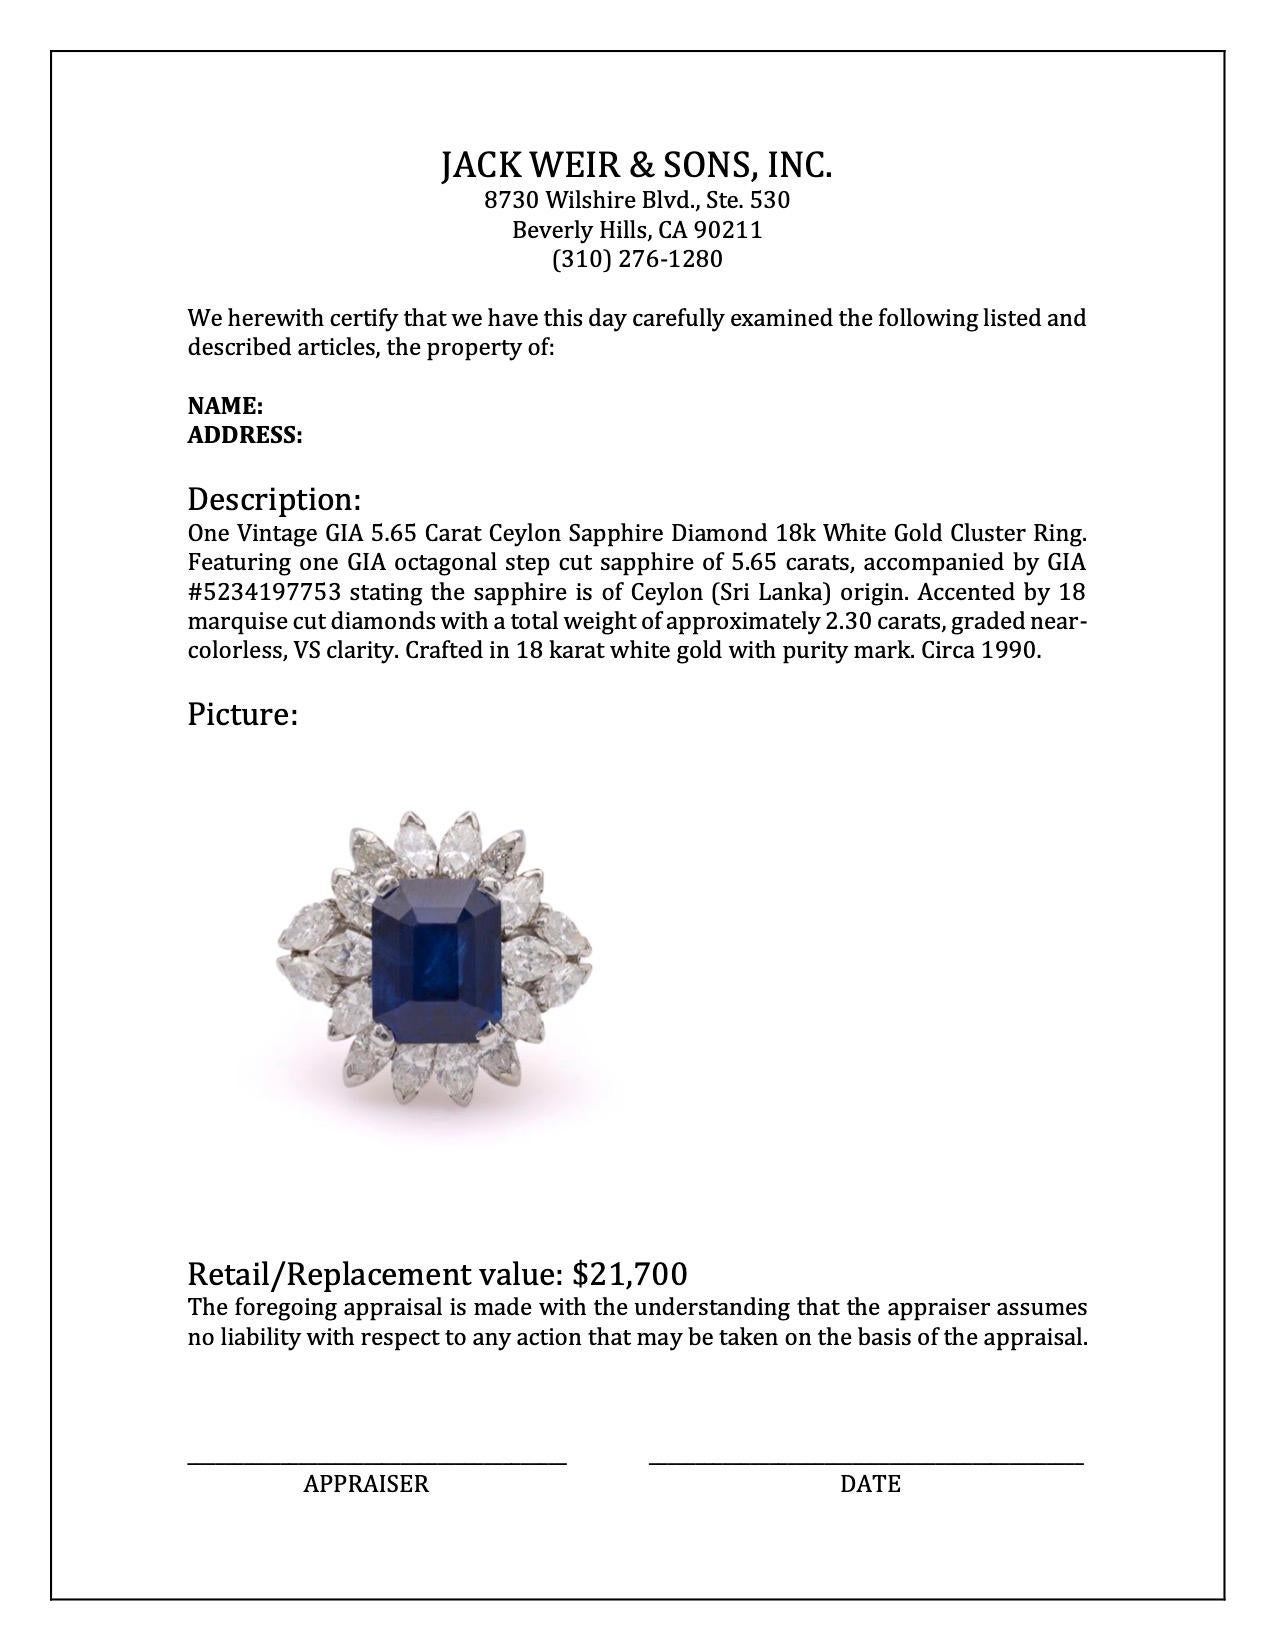 Vintage GIA 5.65 Carat Ceylon Sapphire Diamond 18k White Gold Cluster Ring For Sale 2